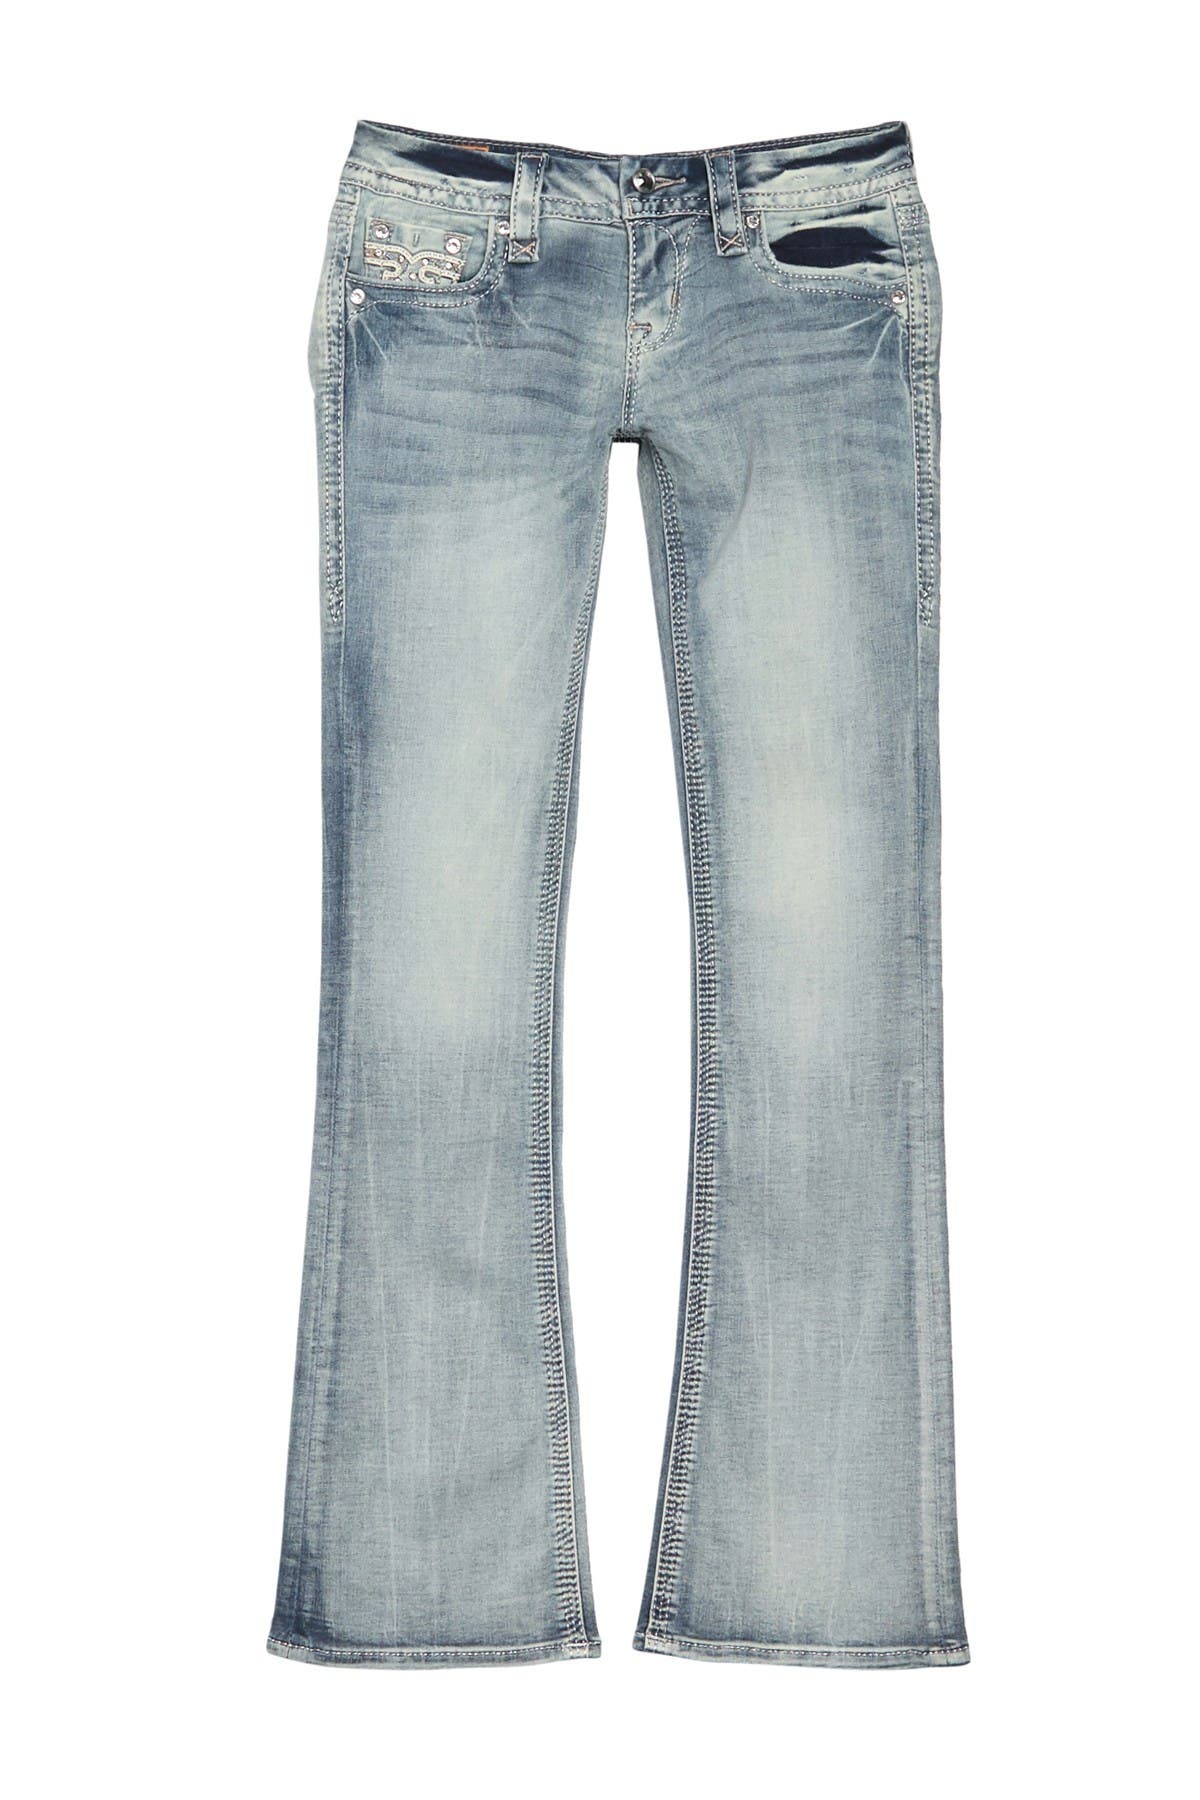 nordstrom rack rock revival jeans